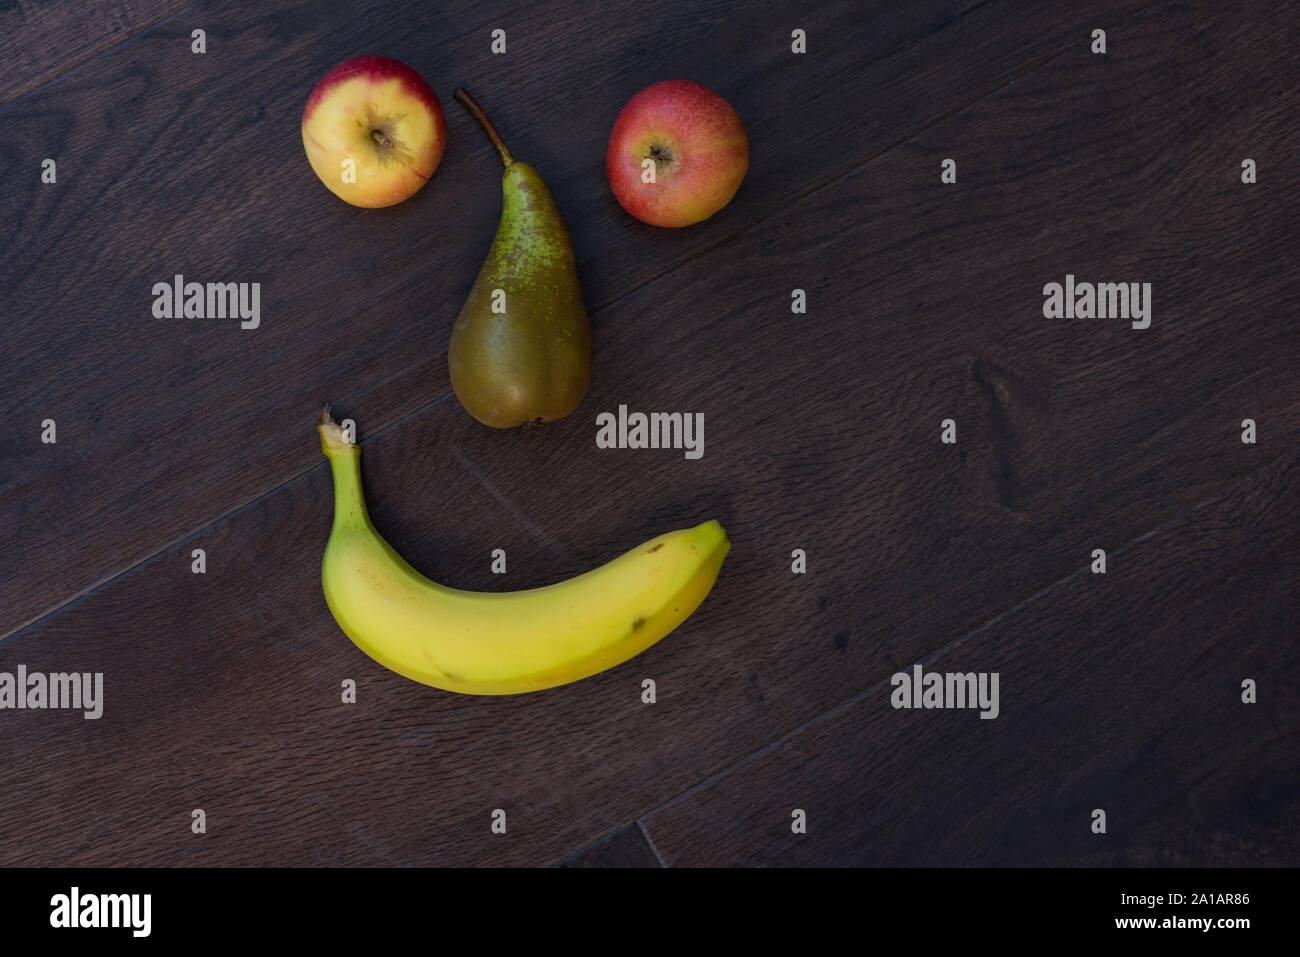 fruit emoji happy smile on wooden surface floor Stock Photo